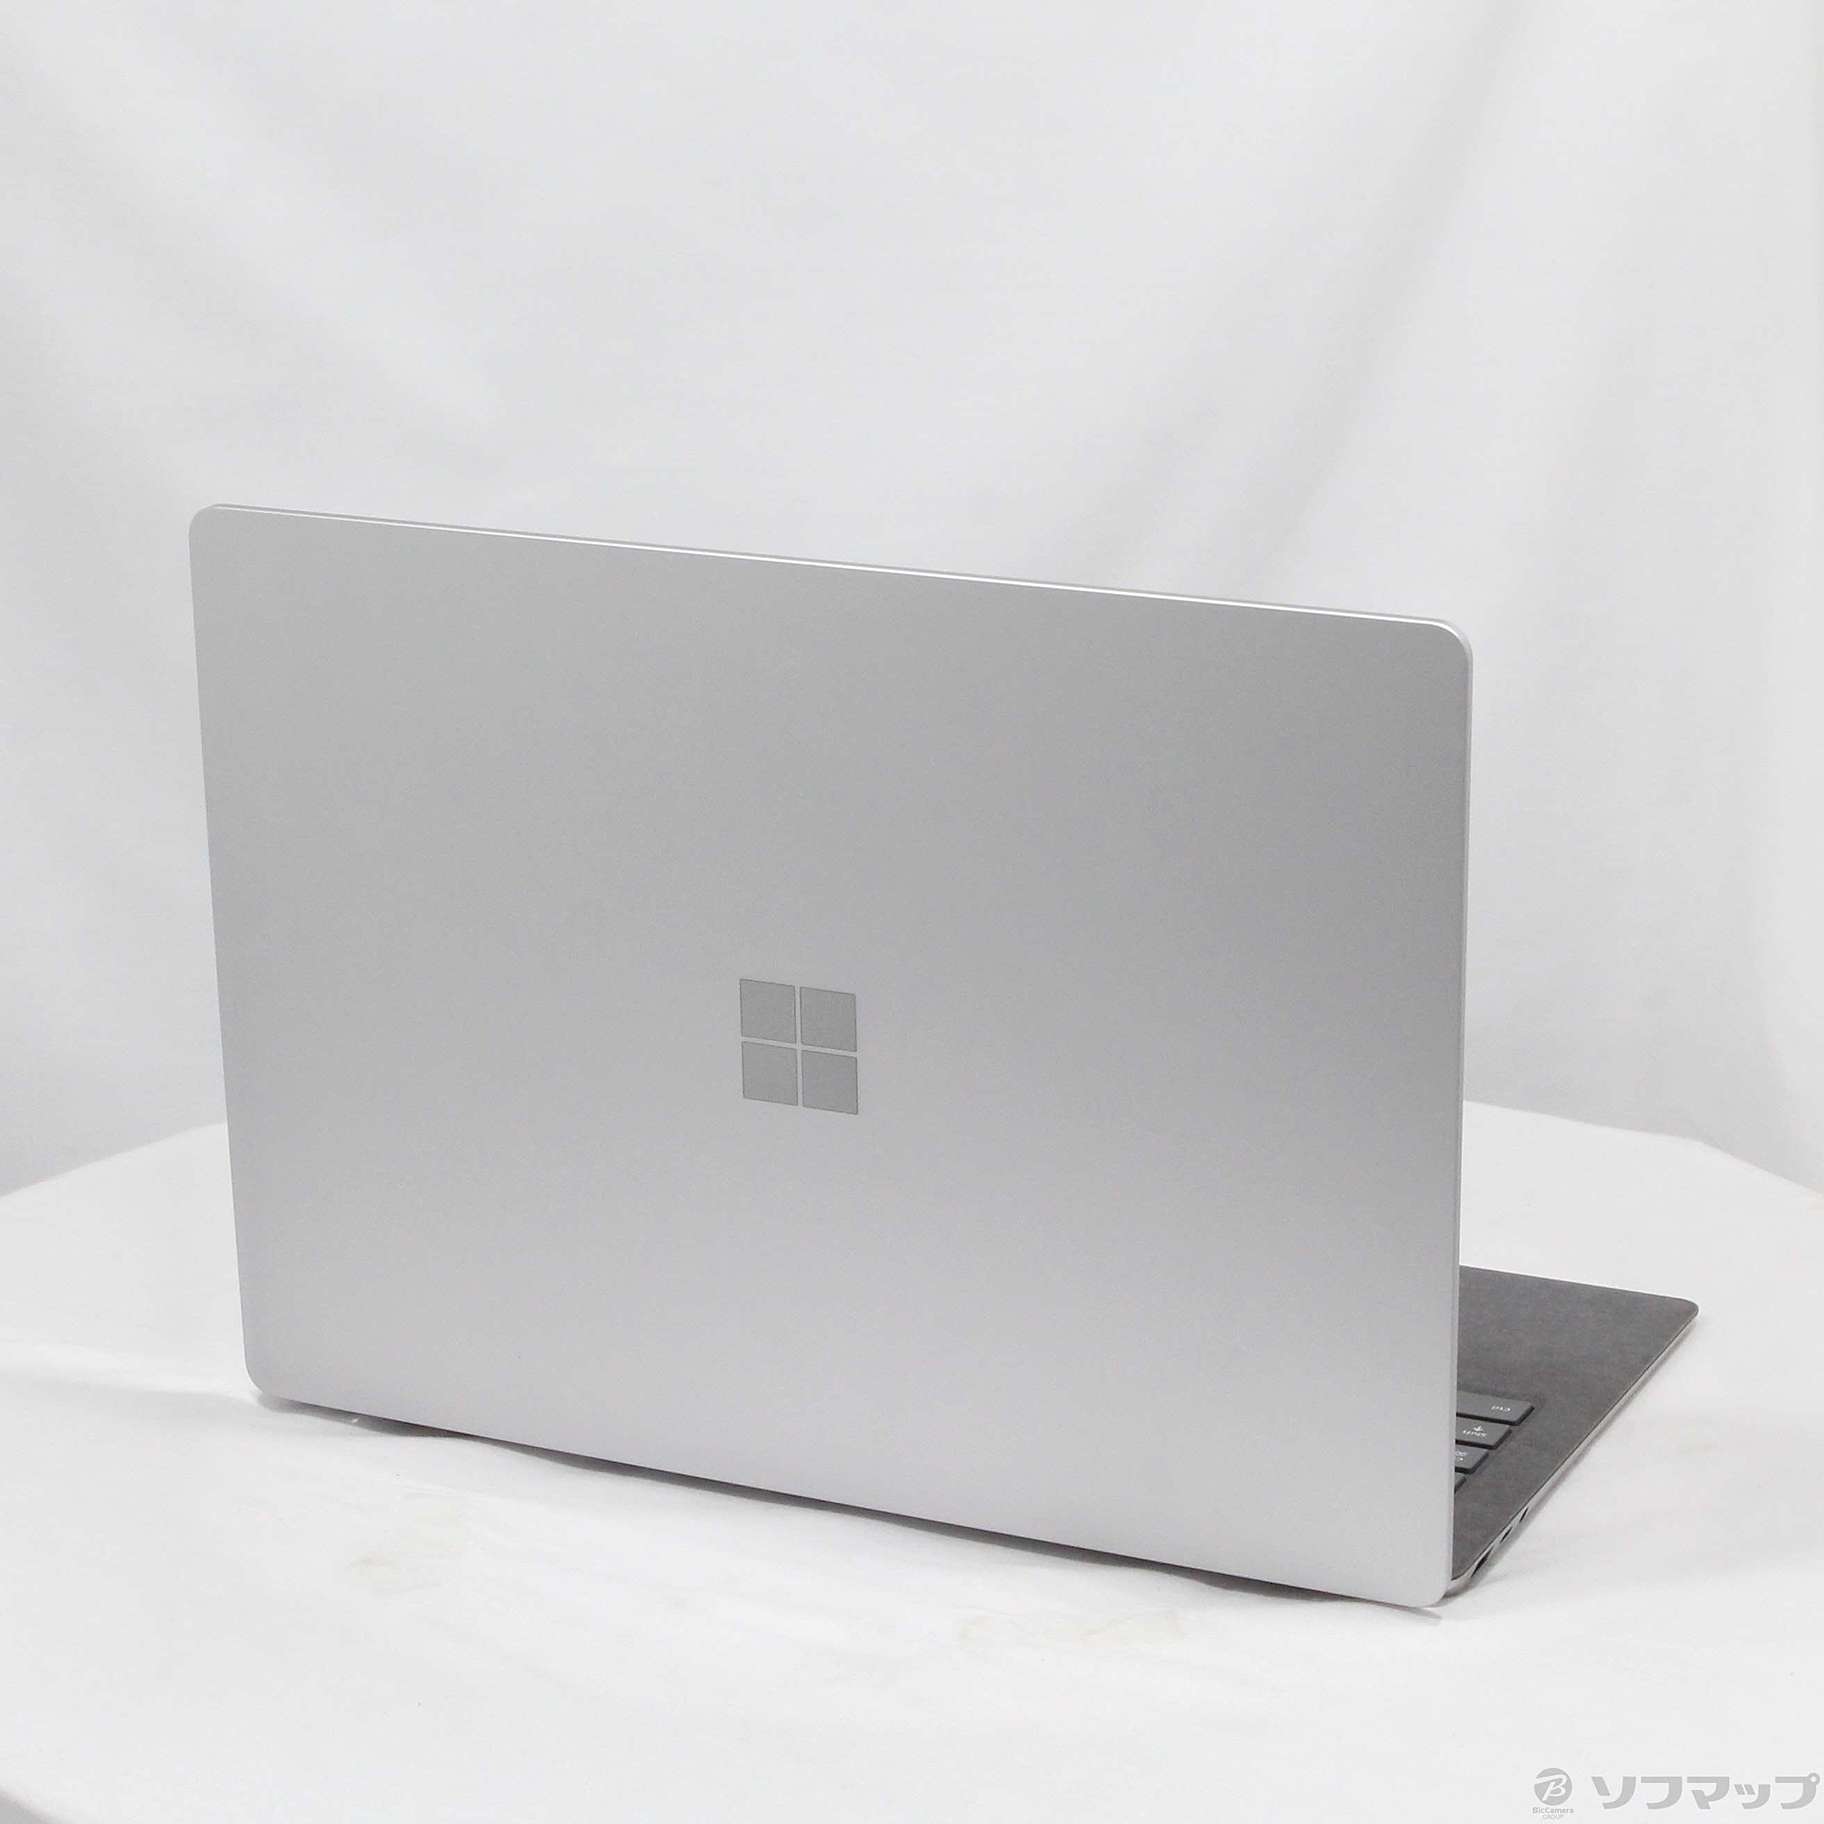 中古】Surface Laptop 3 〔Core i5／8GB／SSD128GB〕 VGY-00018 ...